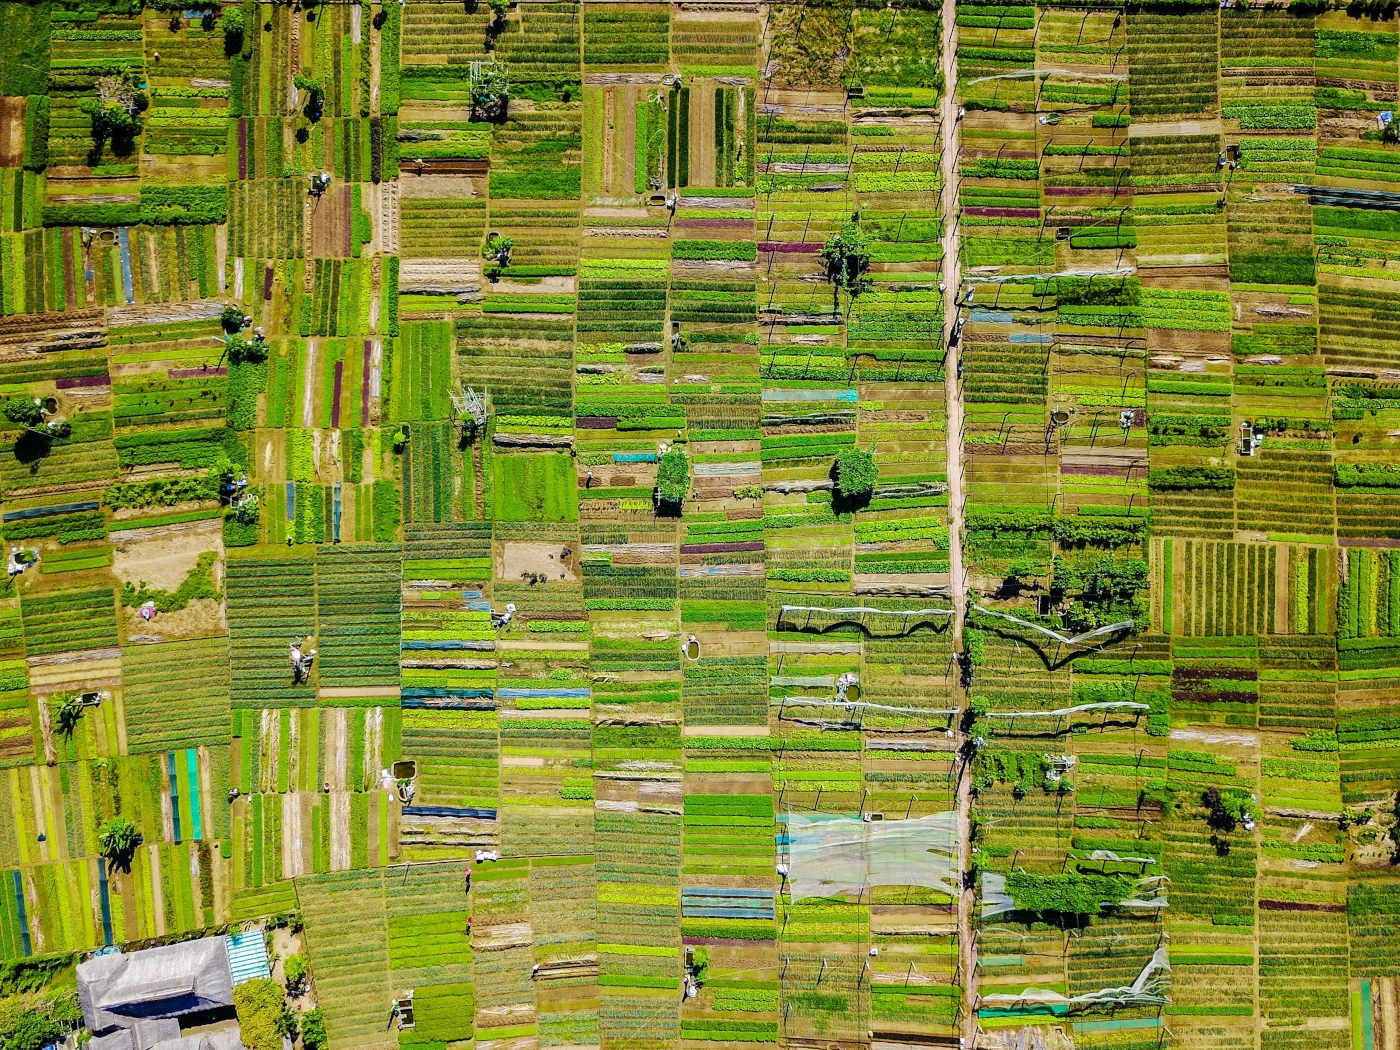 Vast biodiverse landscape of farming agriculture.